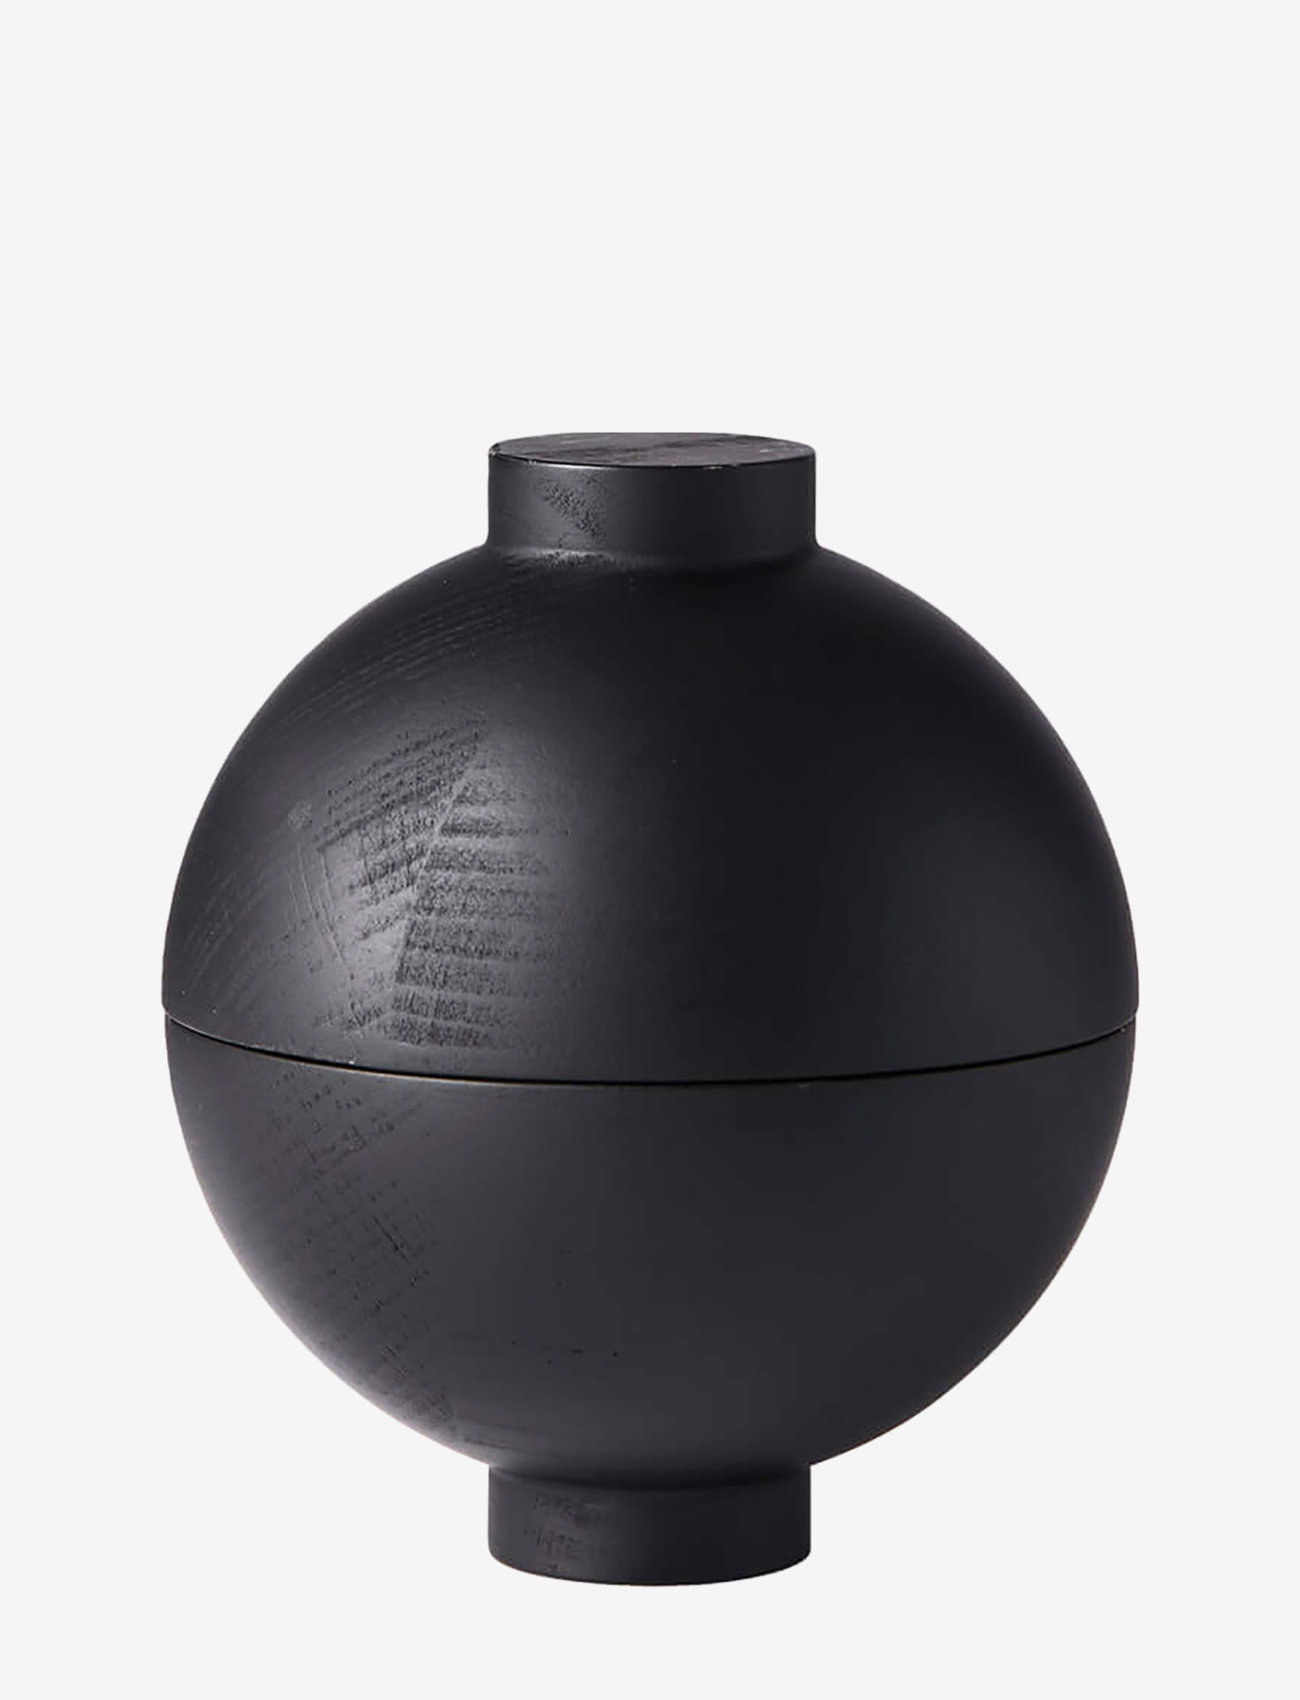 Kristina Dam Studio - Wooden Sphere - wooden figures - black painted wood - 0